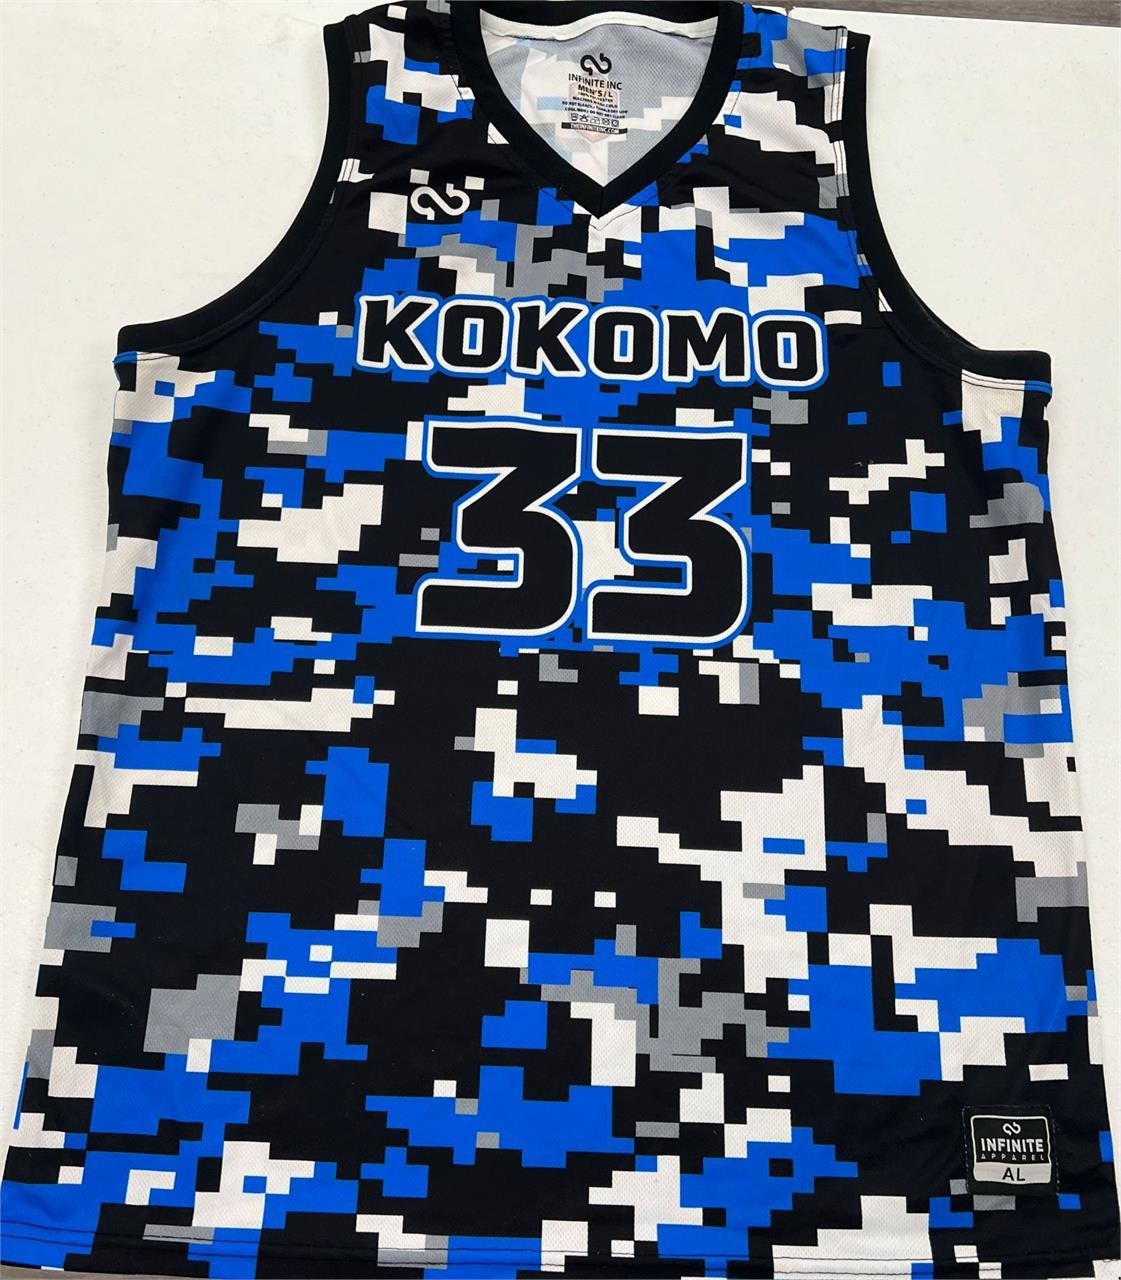 Kokomo Bobkats Military Jersey Auction